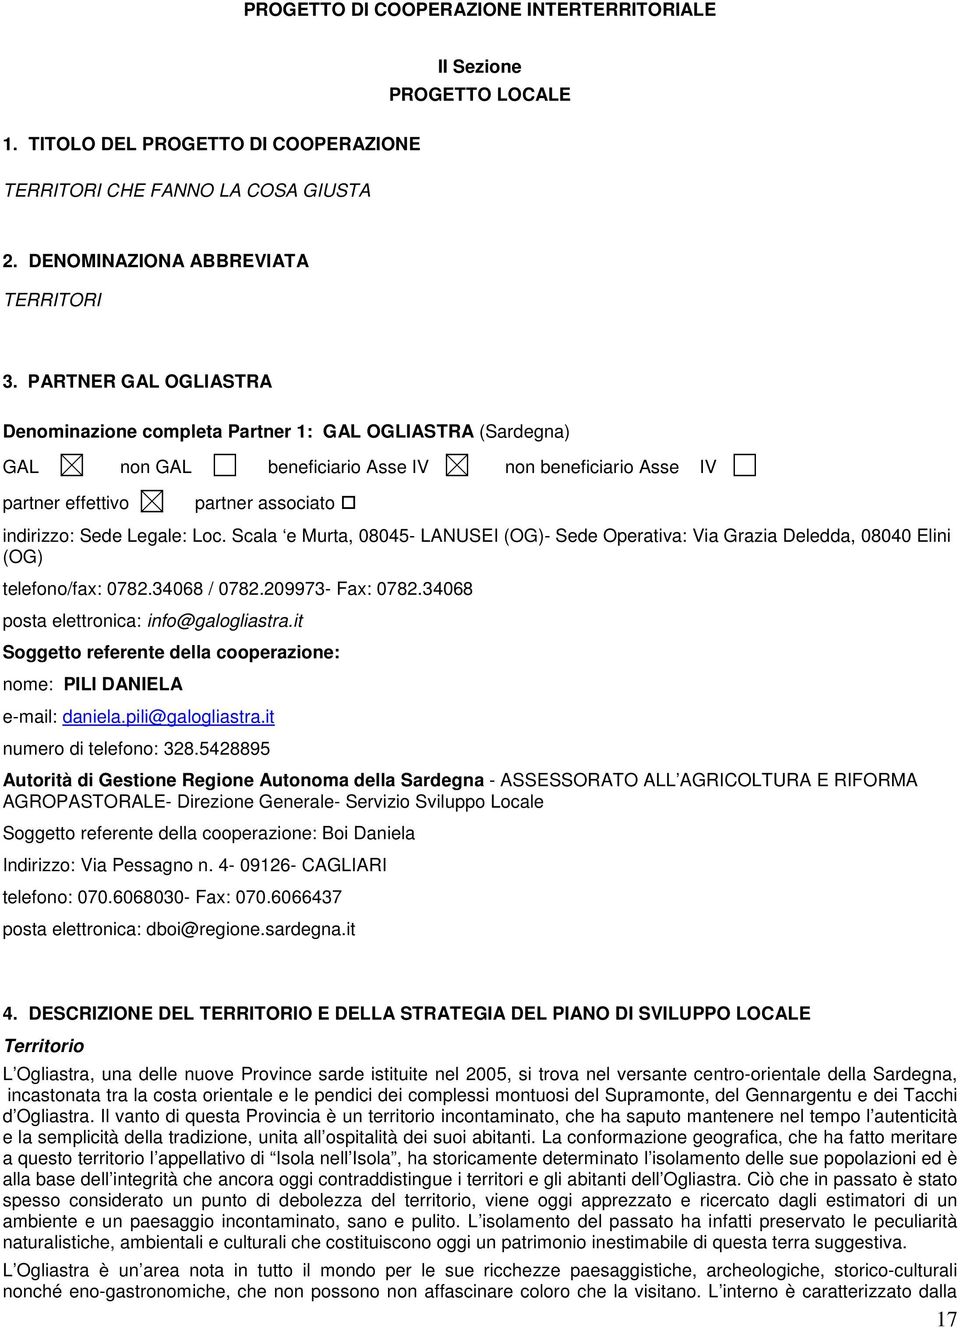 Loc. Scala e Murta, 08045- LANUSEI (OG)- Sede Operativa: Via Grazia Deledda, 08040 Elini (OG) telefono/fax: 0782.34068 / 0782.209973- Fax: 0782.34068 posta elettronica: info@galogliastra.